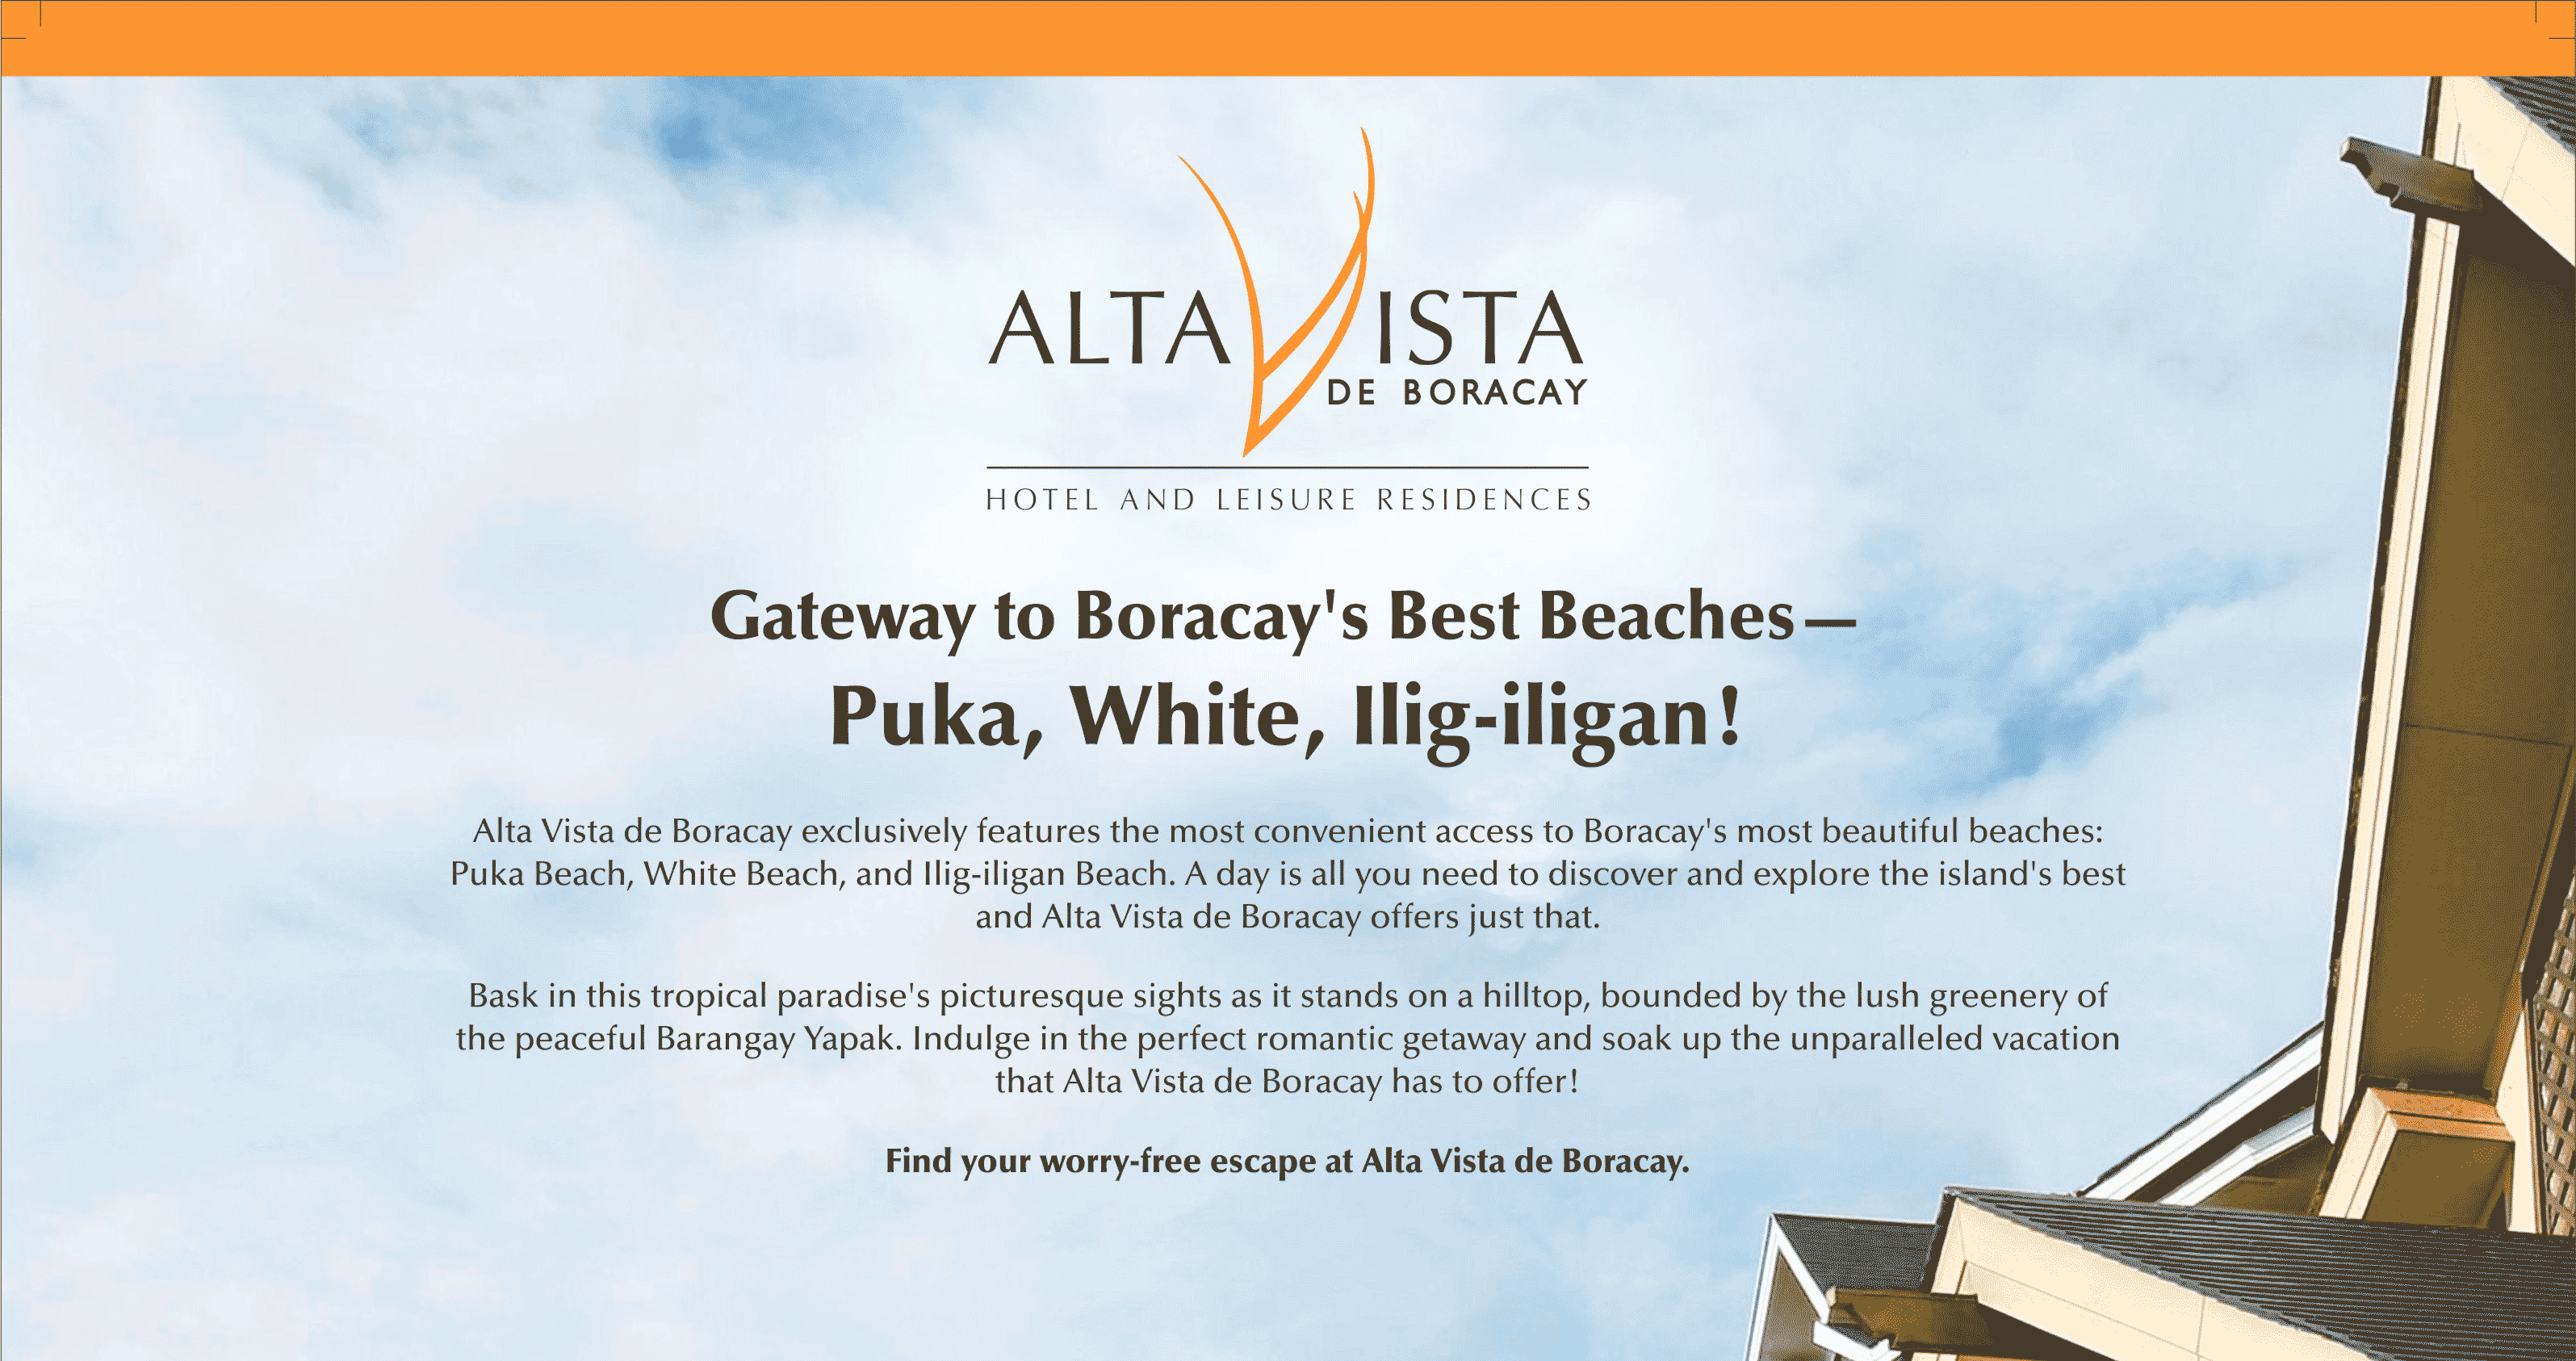 Cruise Your Way to Boracay!